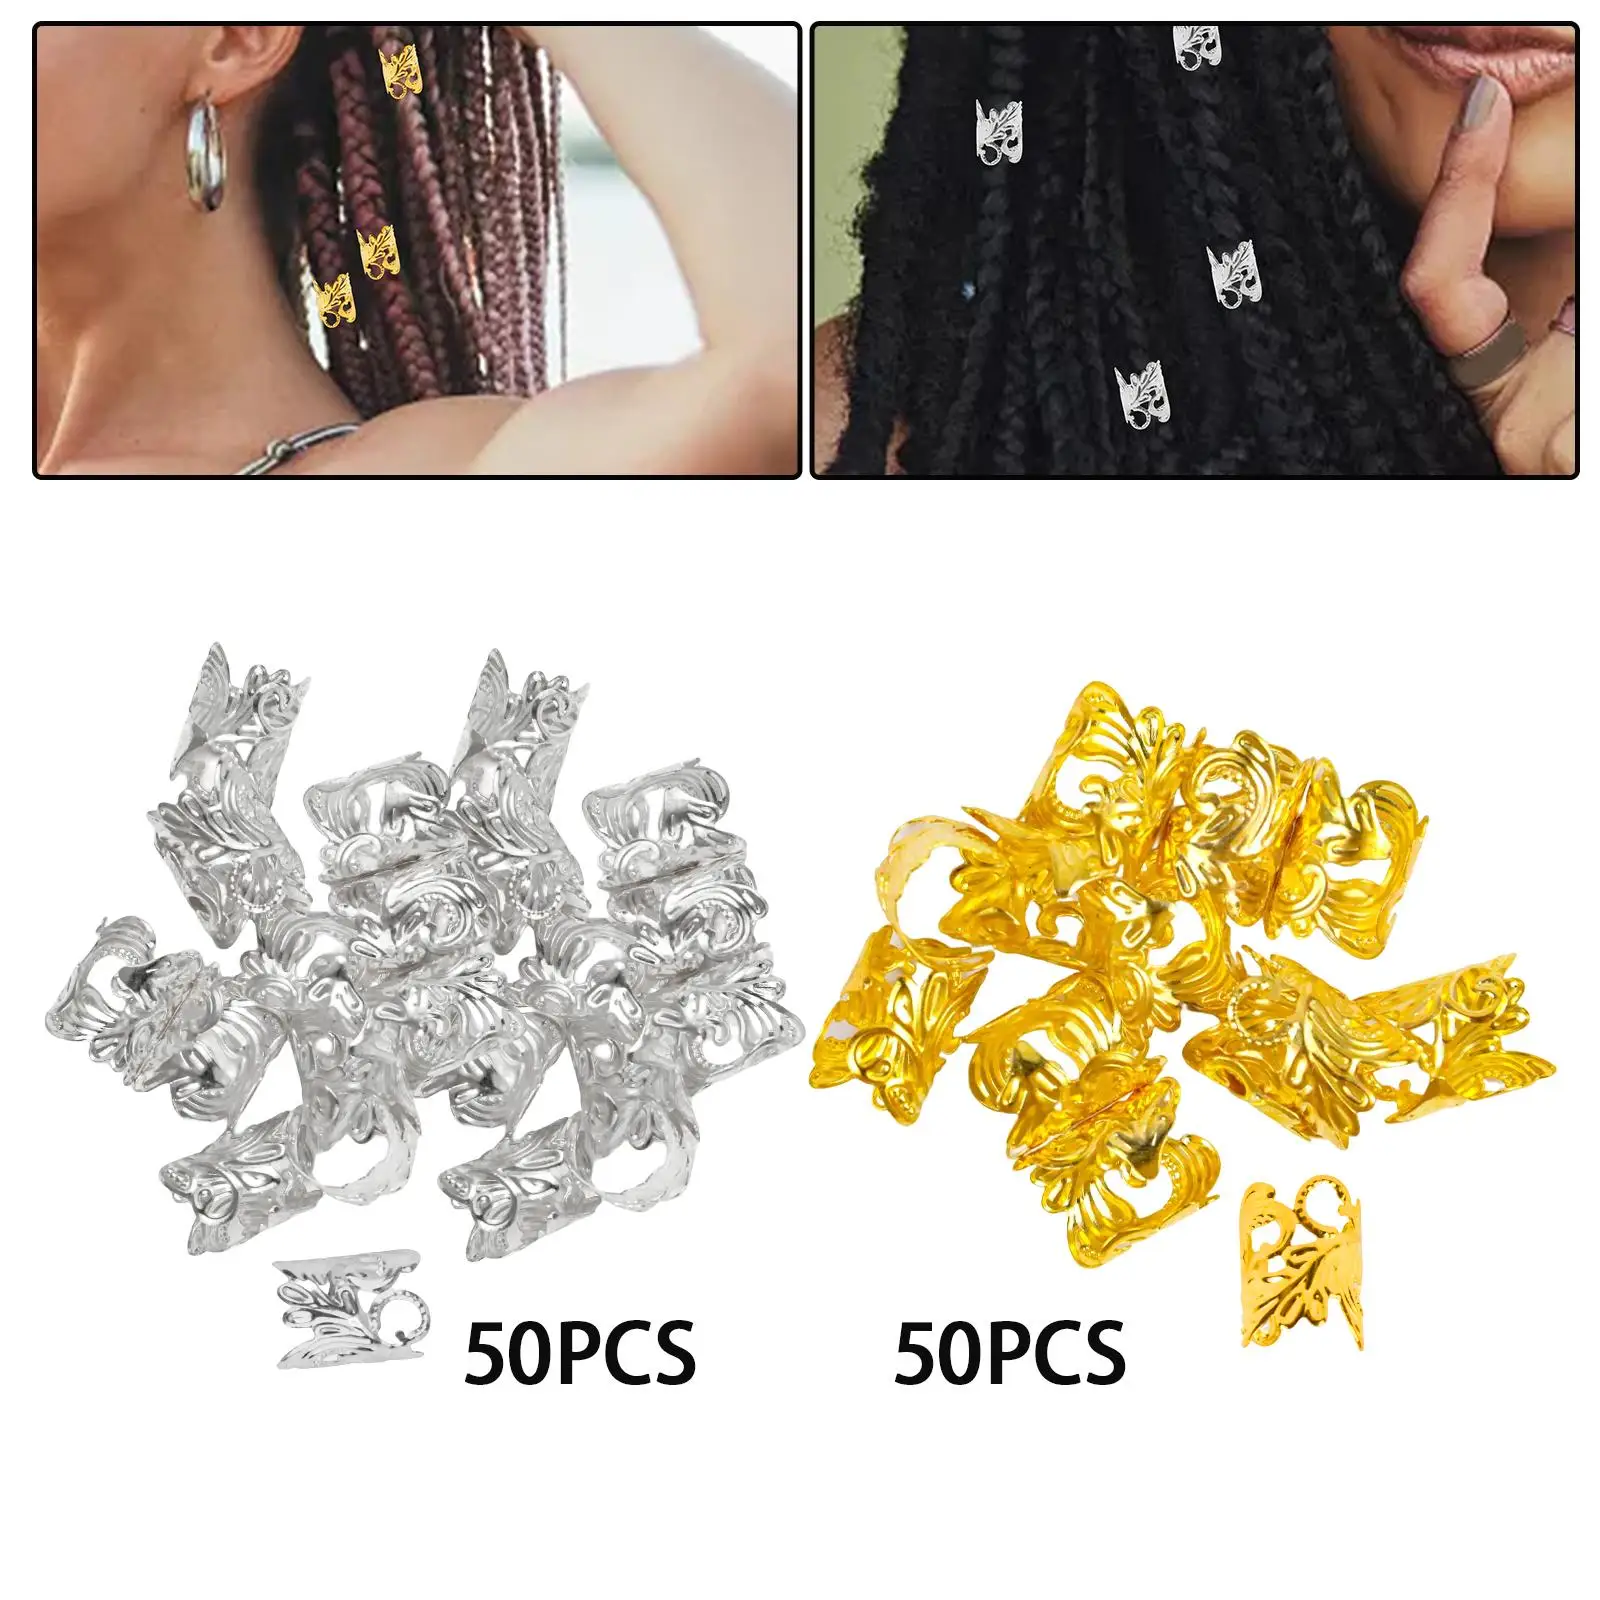 50 Pieces Dreadlocks Beads Braids Ring Clips Reusable for Necklace Women Men